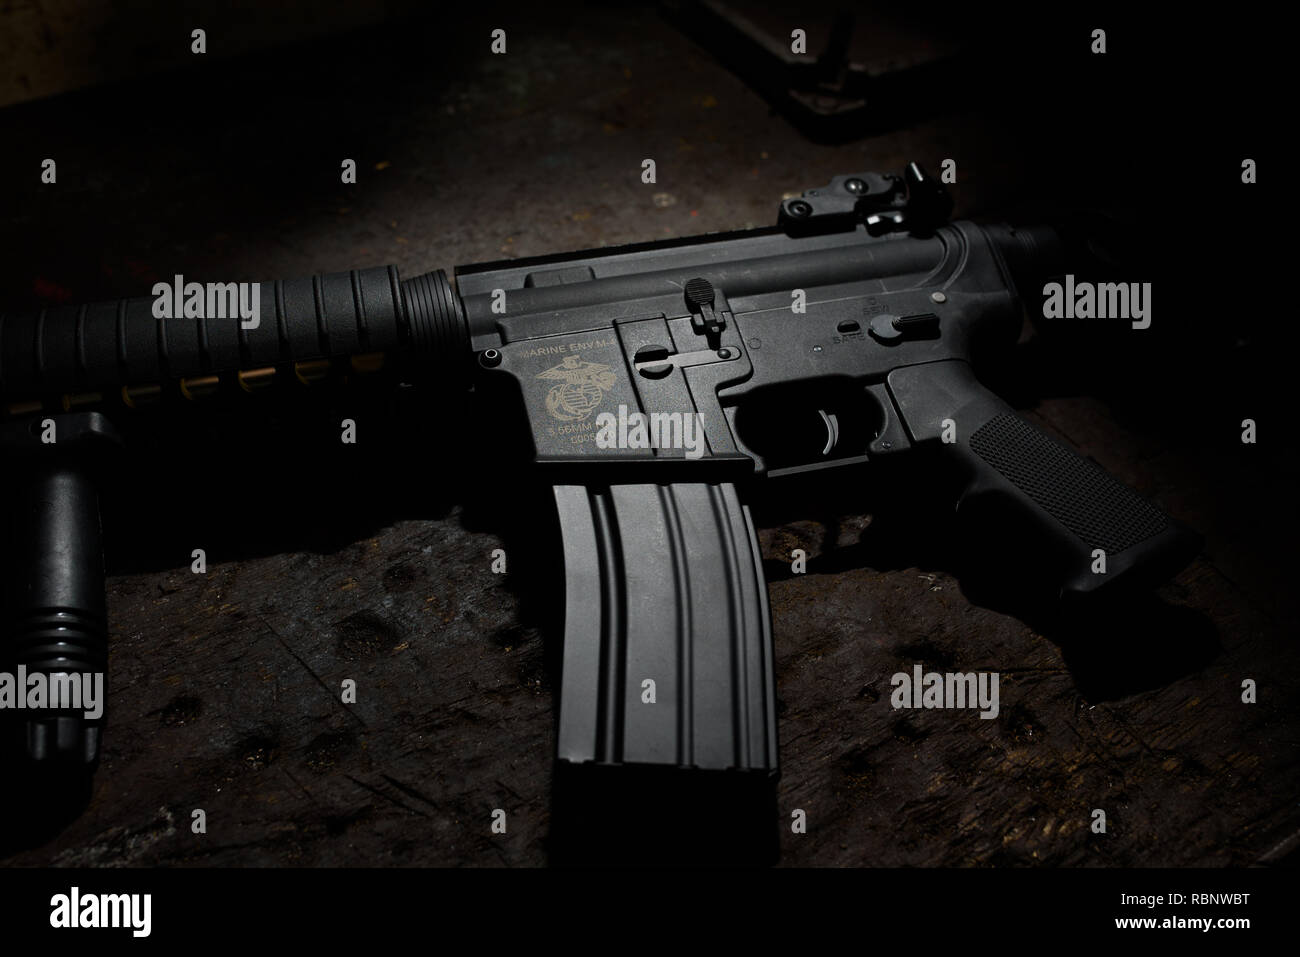 E&C M4 Airsoft AEG Rifle with M203 Grenade Launcher EC701 (QD 1.5 Gearbox,  Blank Marking) - Black